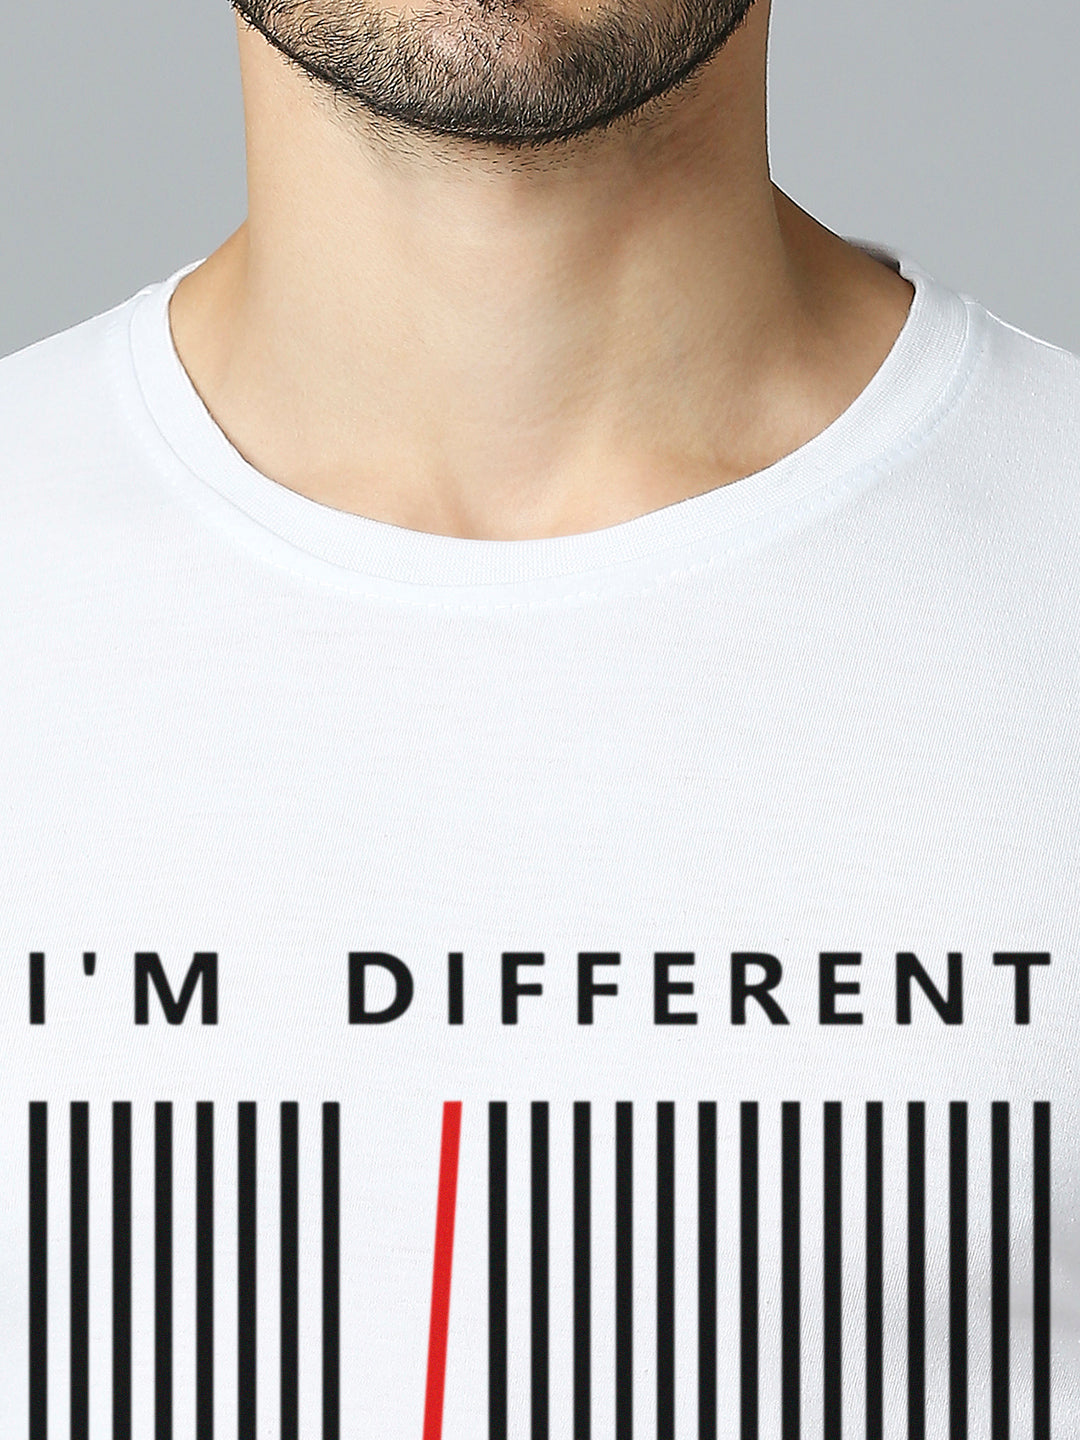 I'm Different T-Shirt